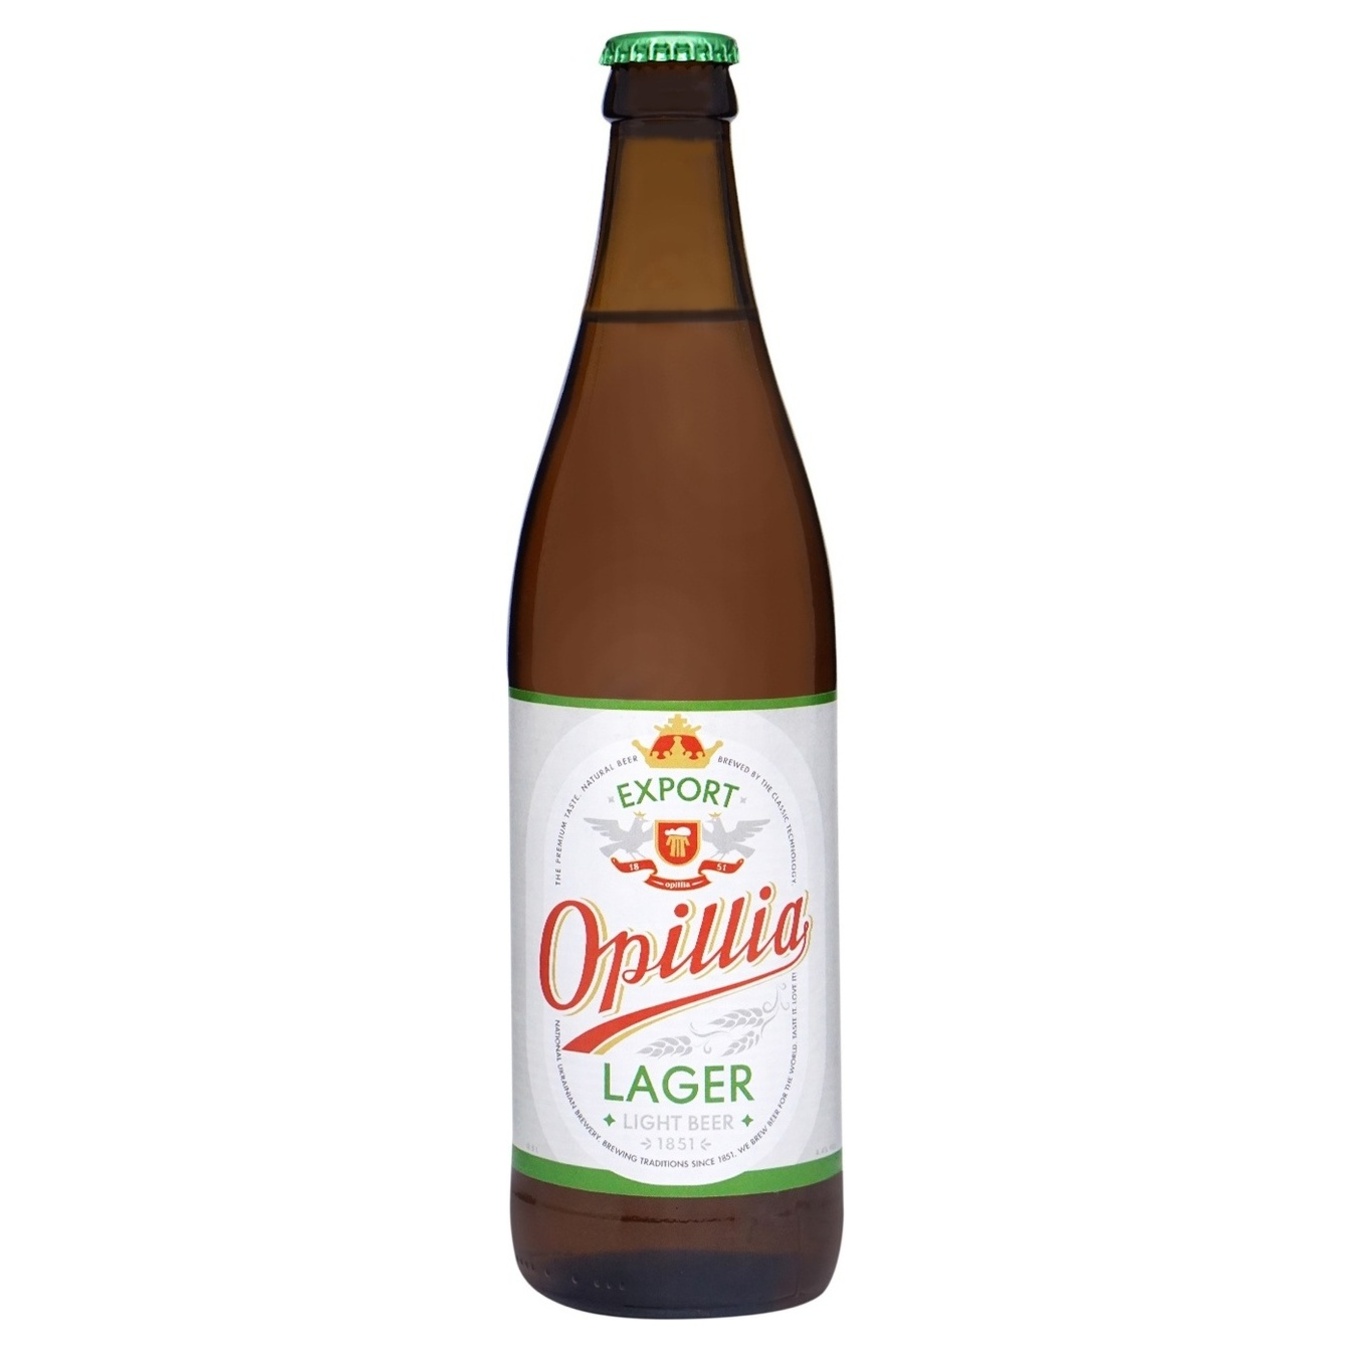 Light beer Opillya Export Lager 4.4% 0.5 l